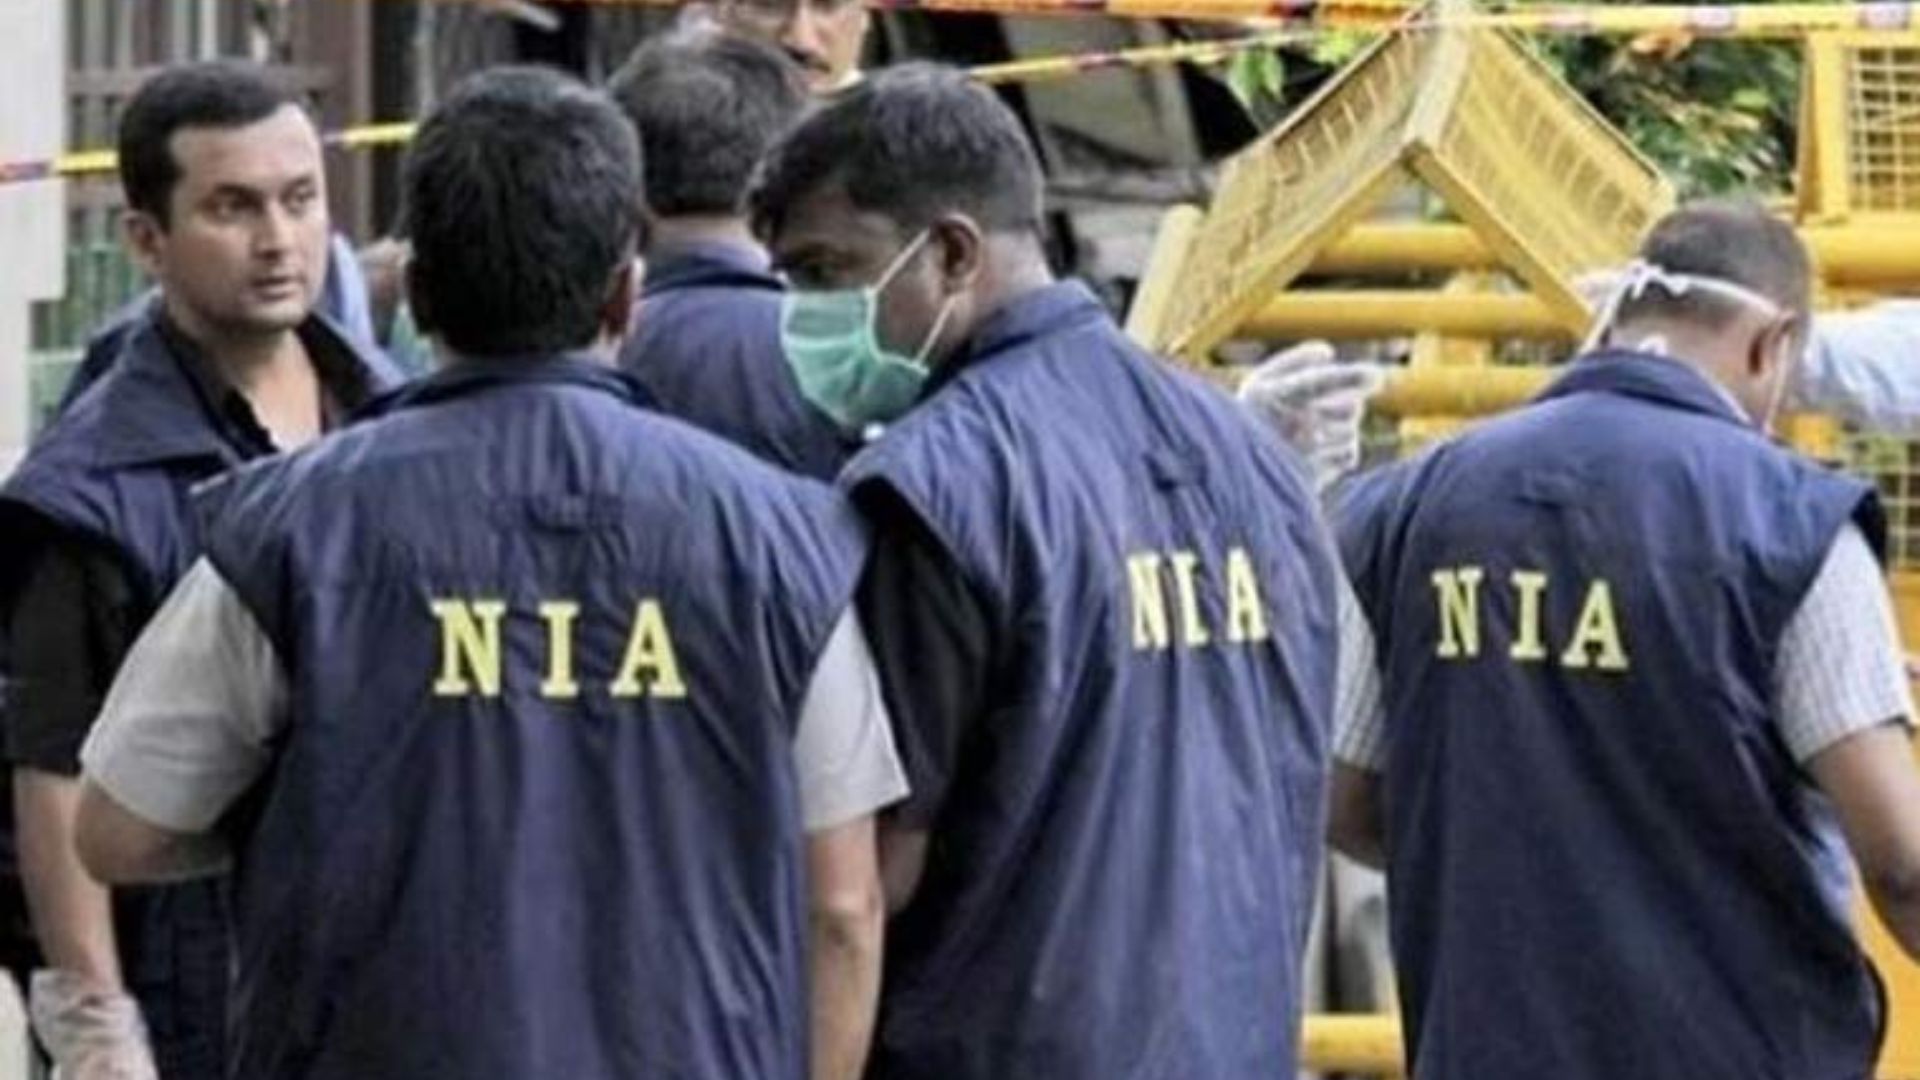 Bengal: NIA team attacked in Purba Medinipur while arresting suspect in blast case